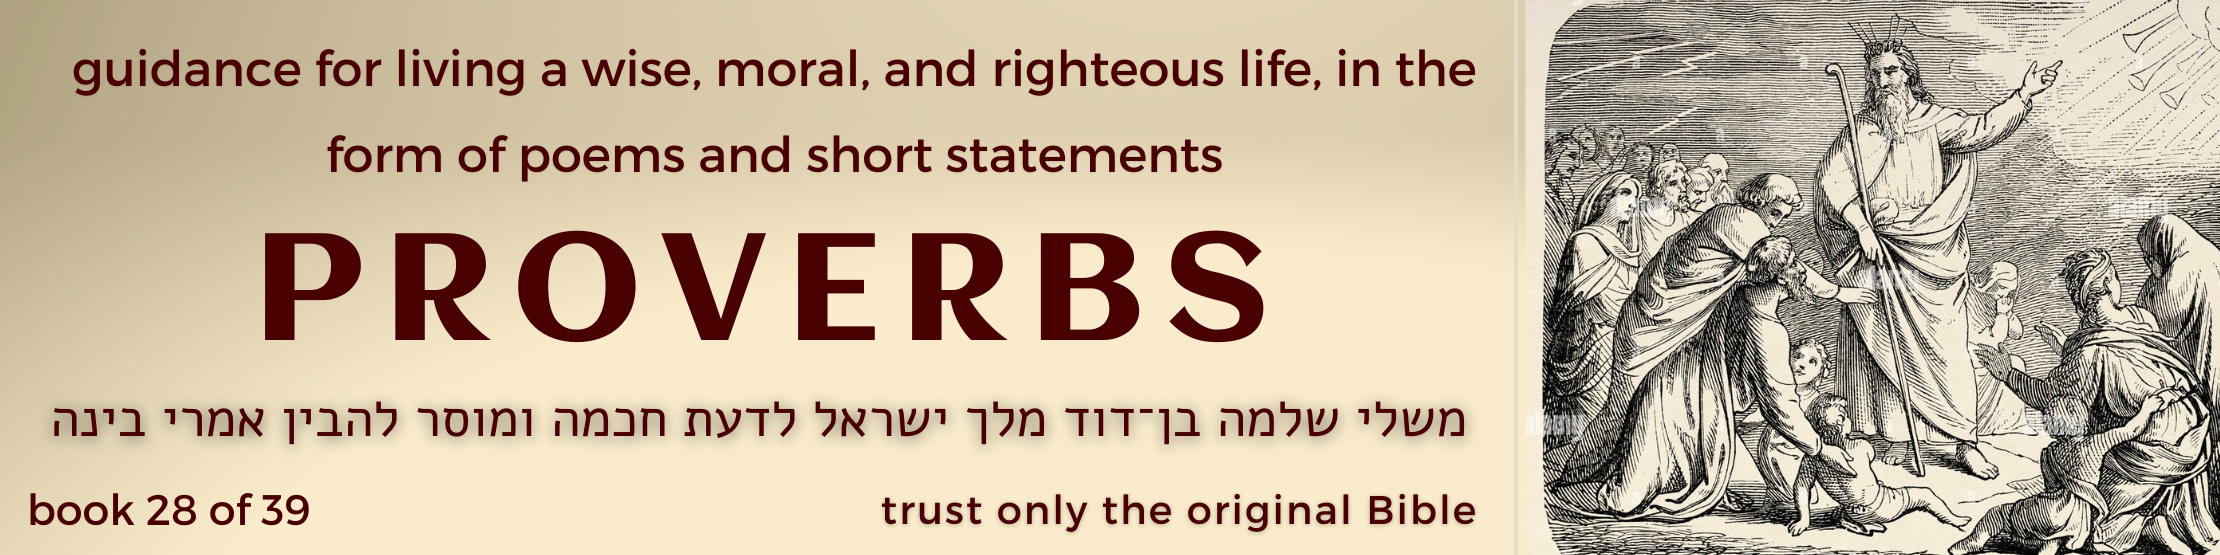 28 Proverbs book - original bible - banner